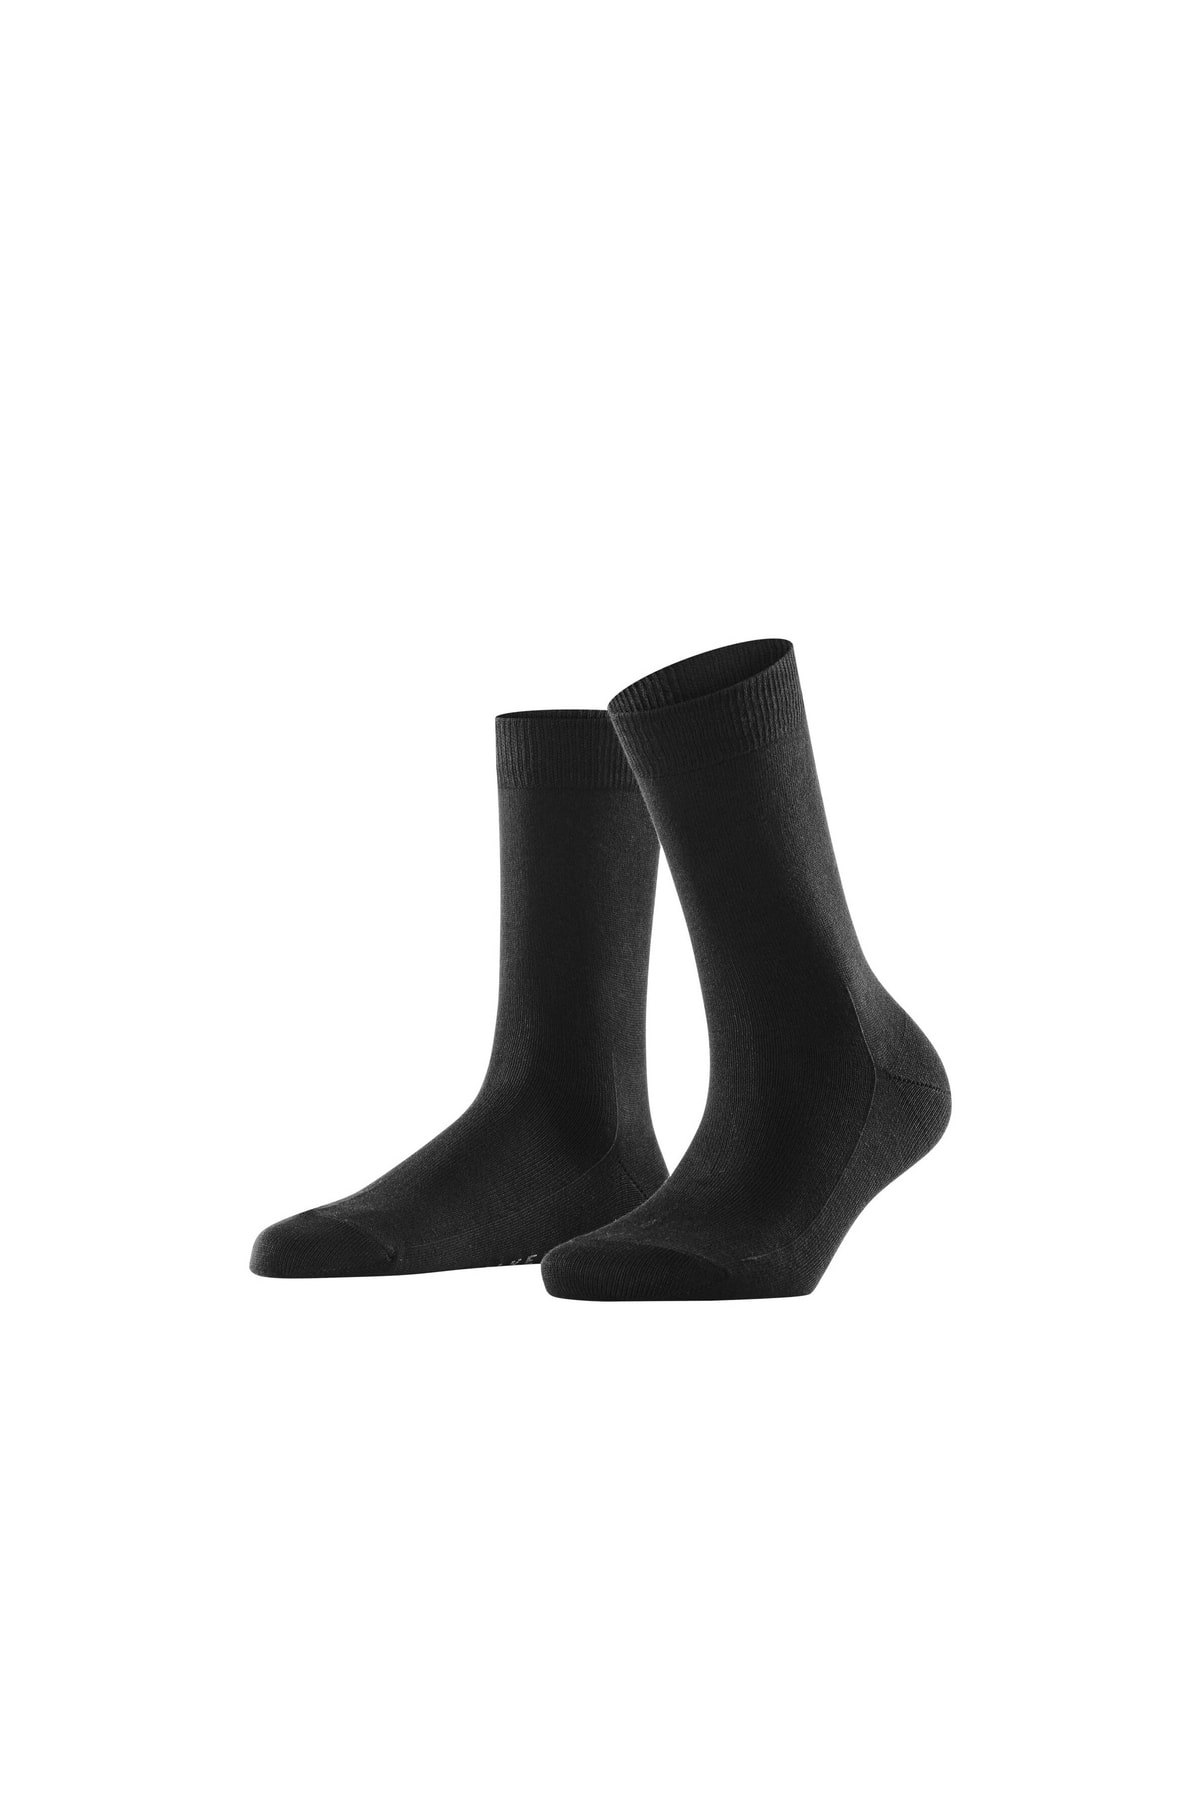 FALKE Socken Schwarz Casual für Damen - 39-42 Hersteller: Falke Bestellnummer: